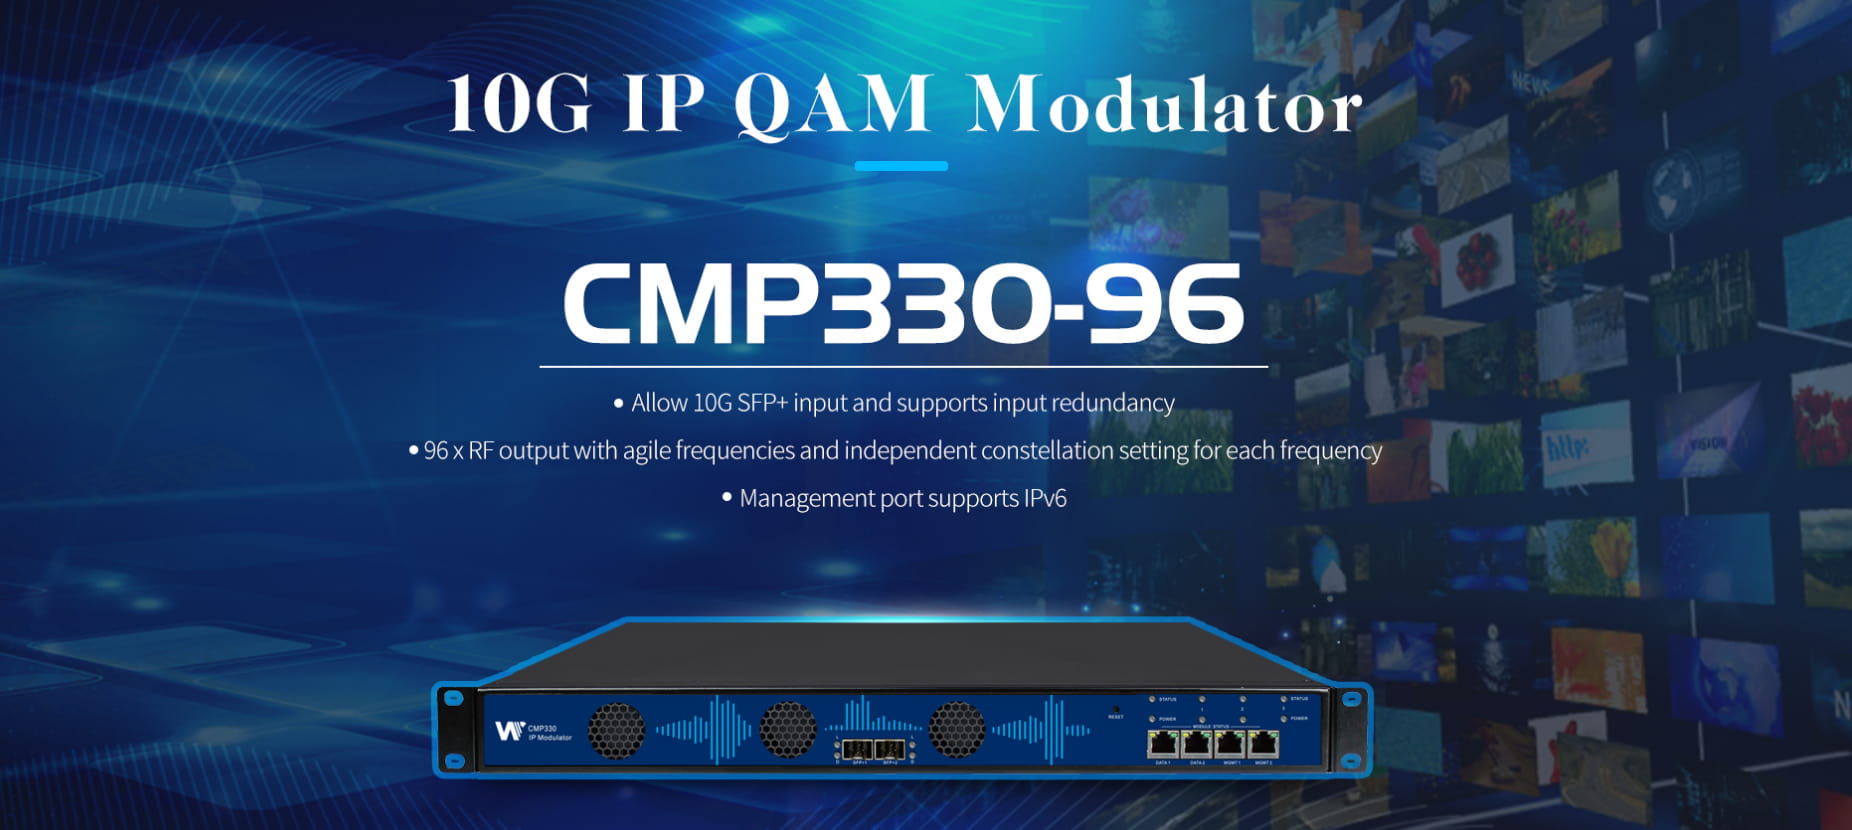 Modulator QAM Edge 10G